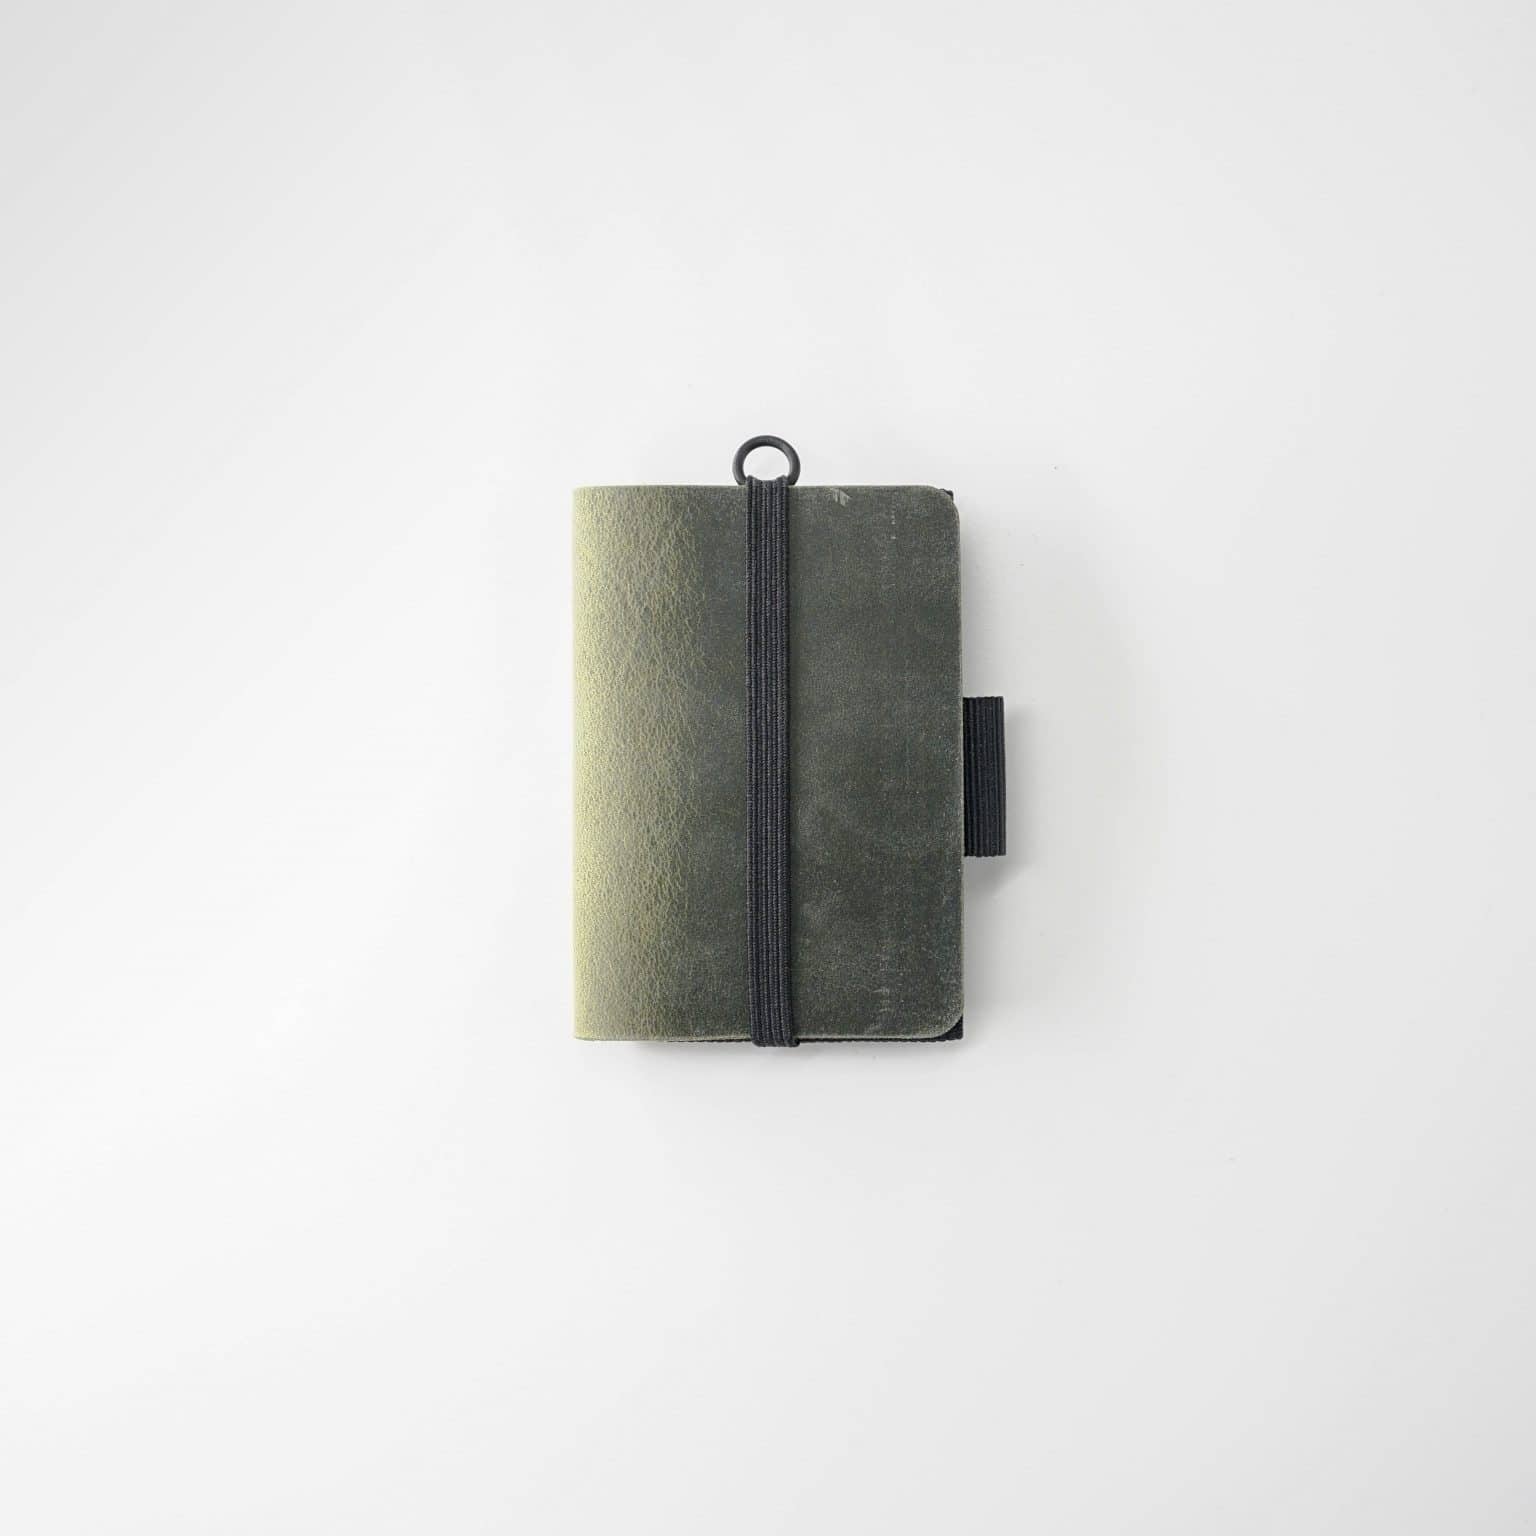 Contemporâneo minimalist carteira com estilo geométrico.